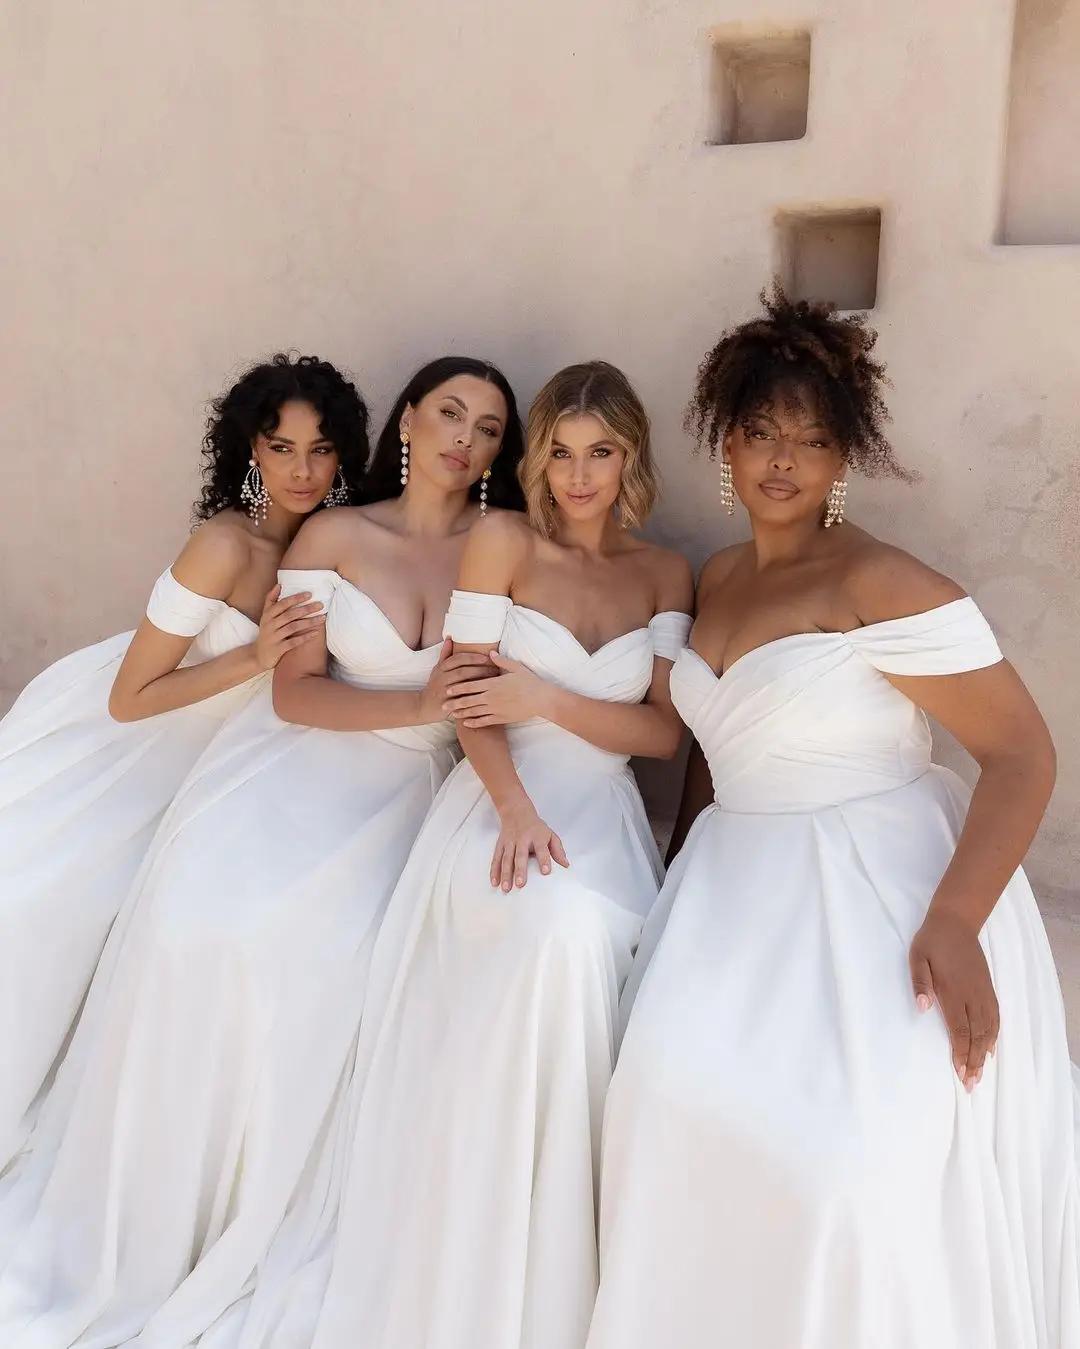 Models wearing multiple sizes of the same wedding dress